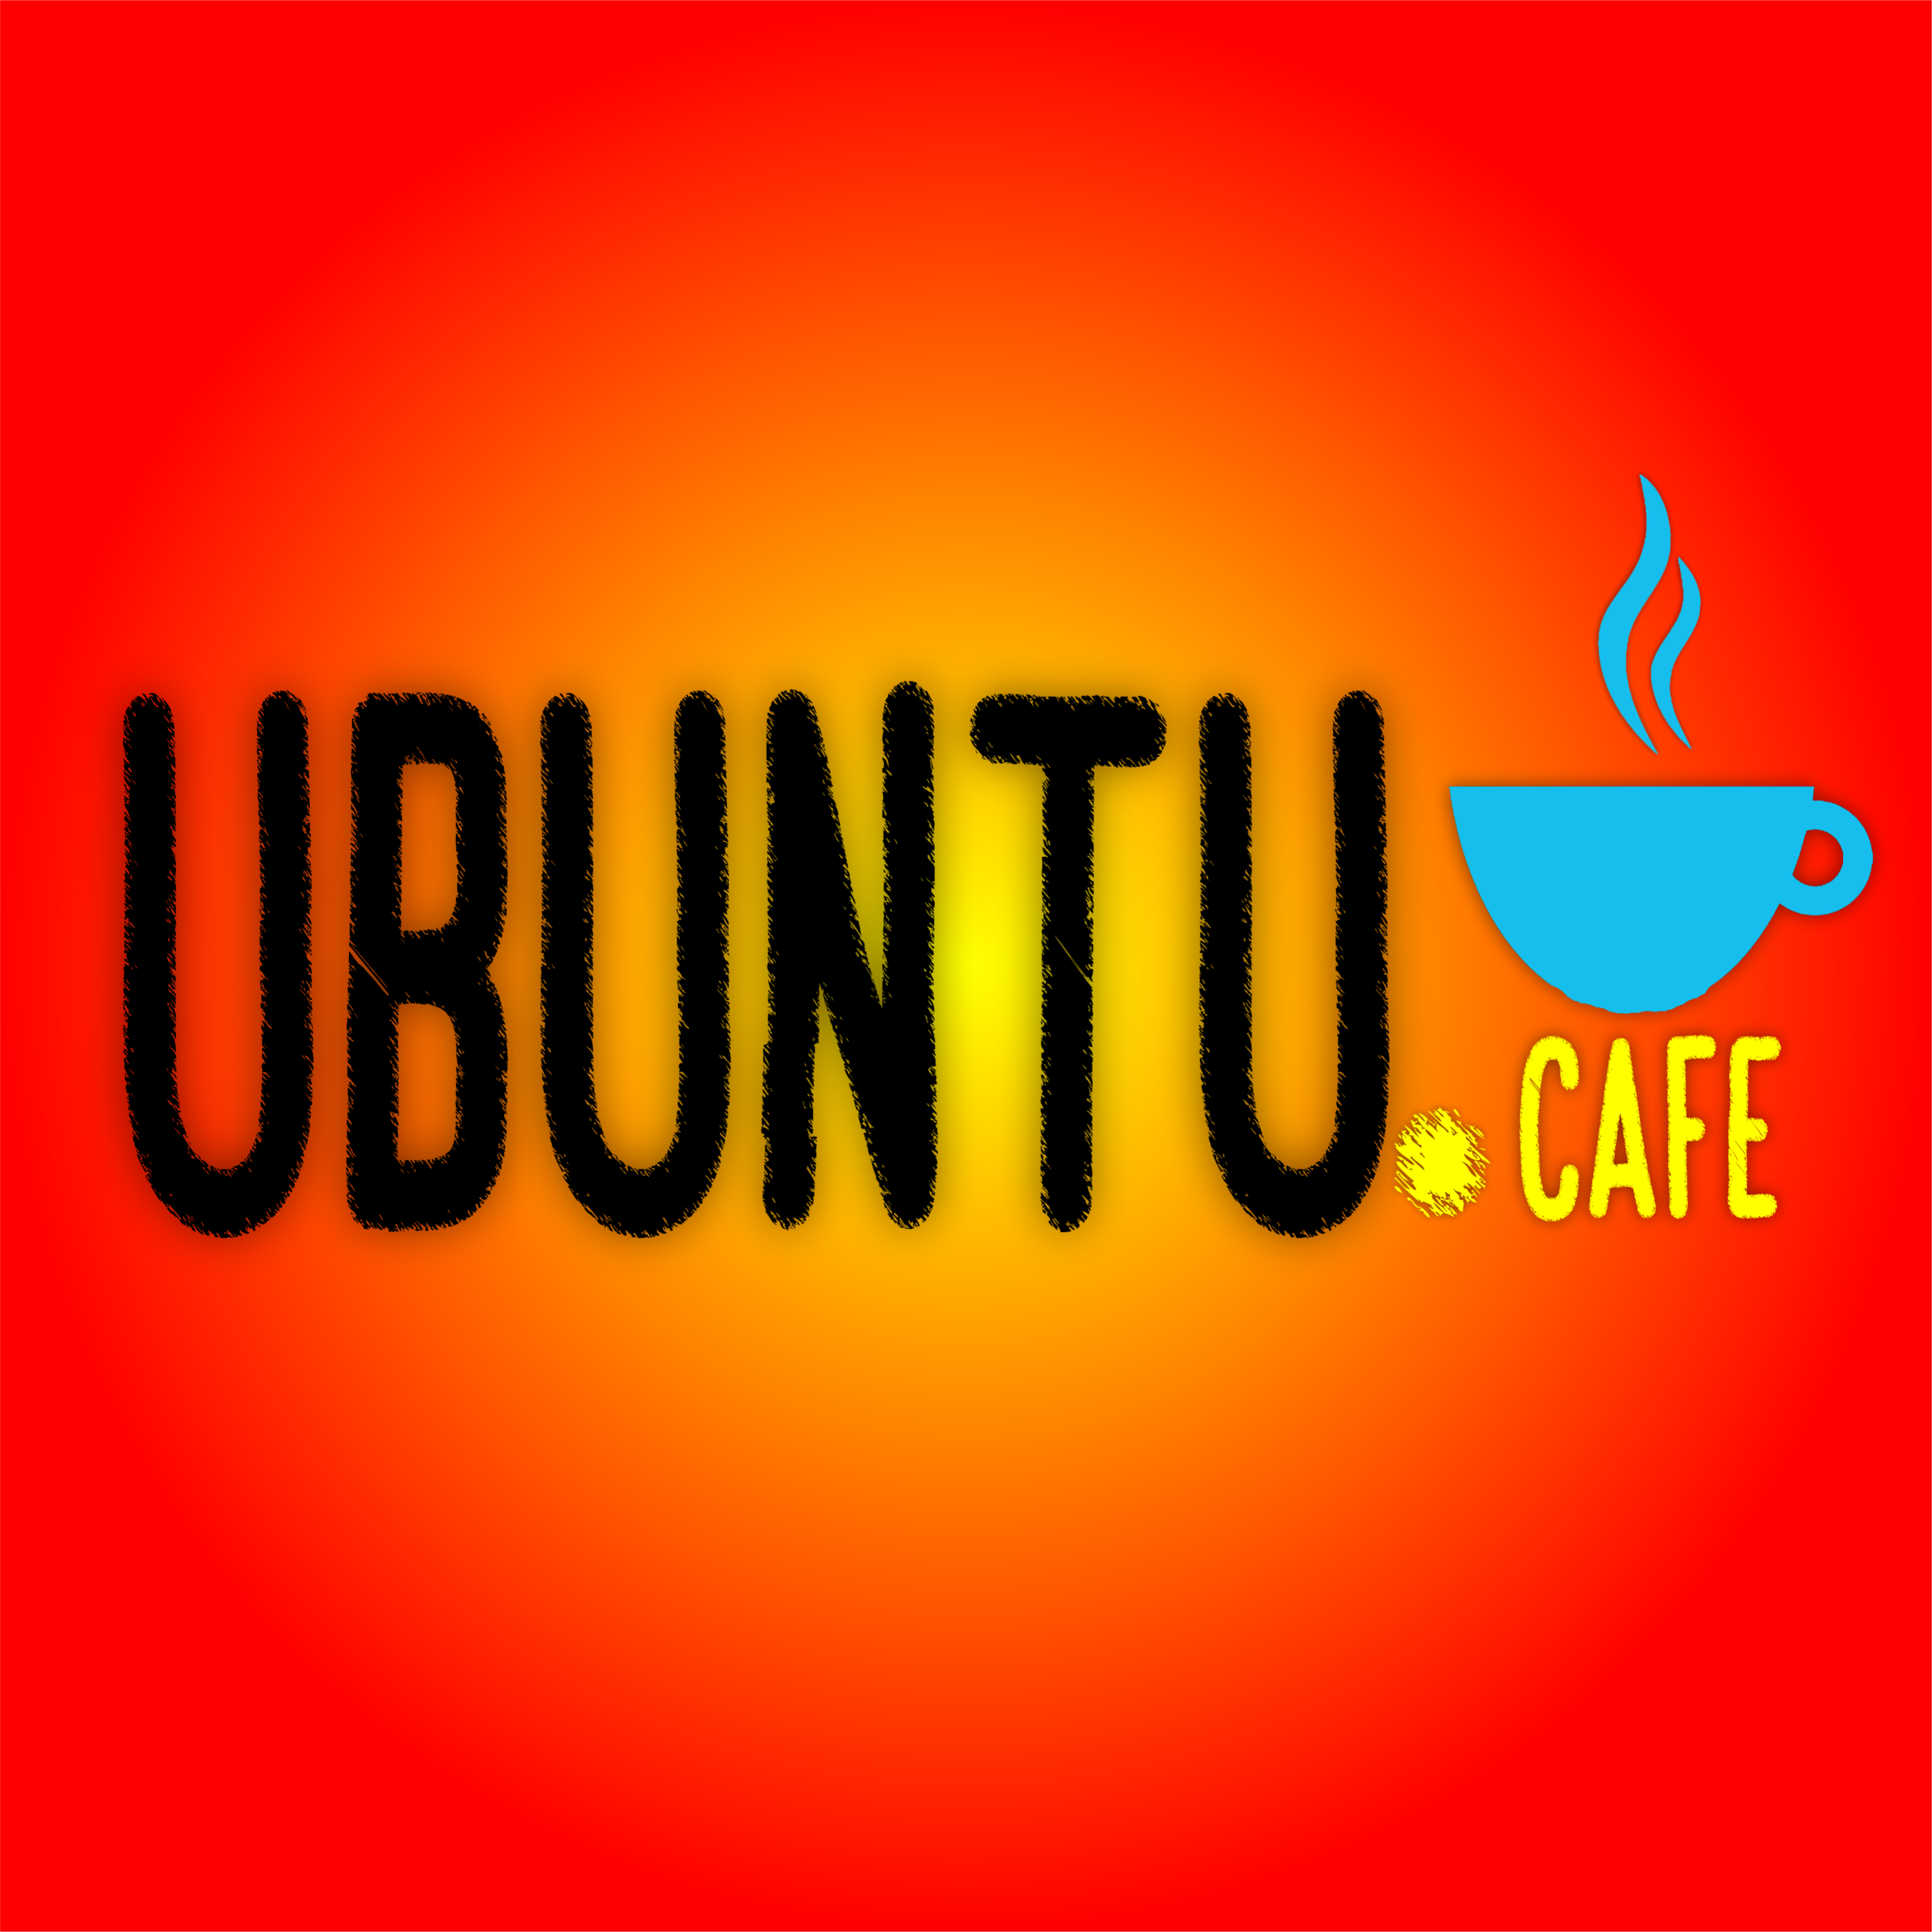 Ubuntu Cafe T3 C3: The Classic Project Disc 1